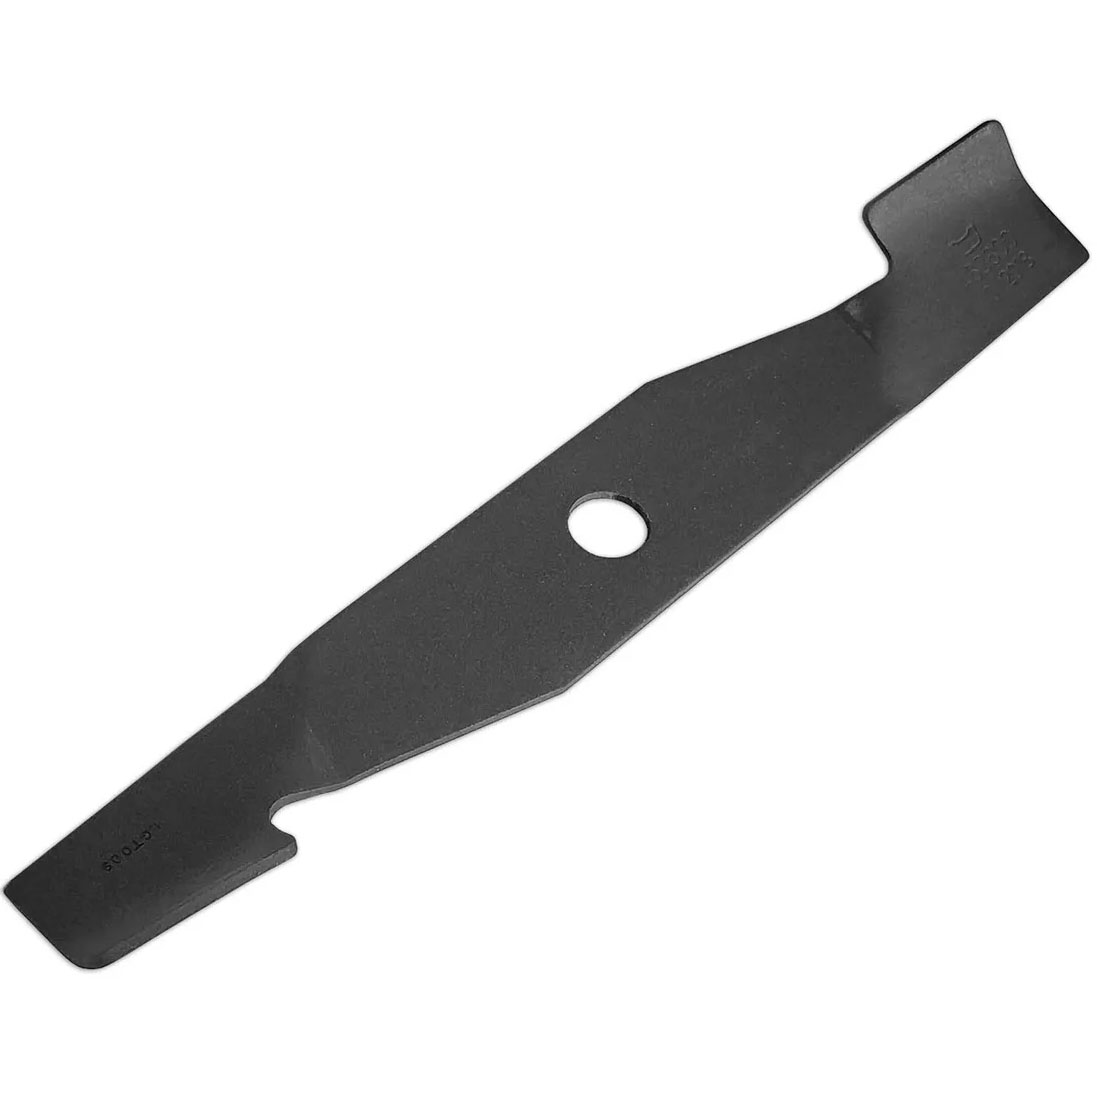 Нож для газонокосилок AL-KO 463800 34 см нож для газонокосилки al ko 463800 34 см